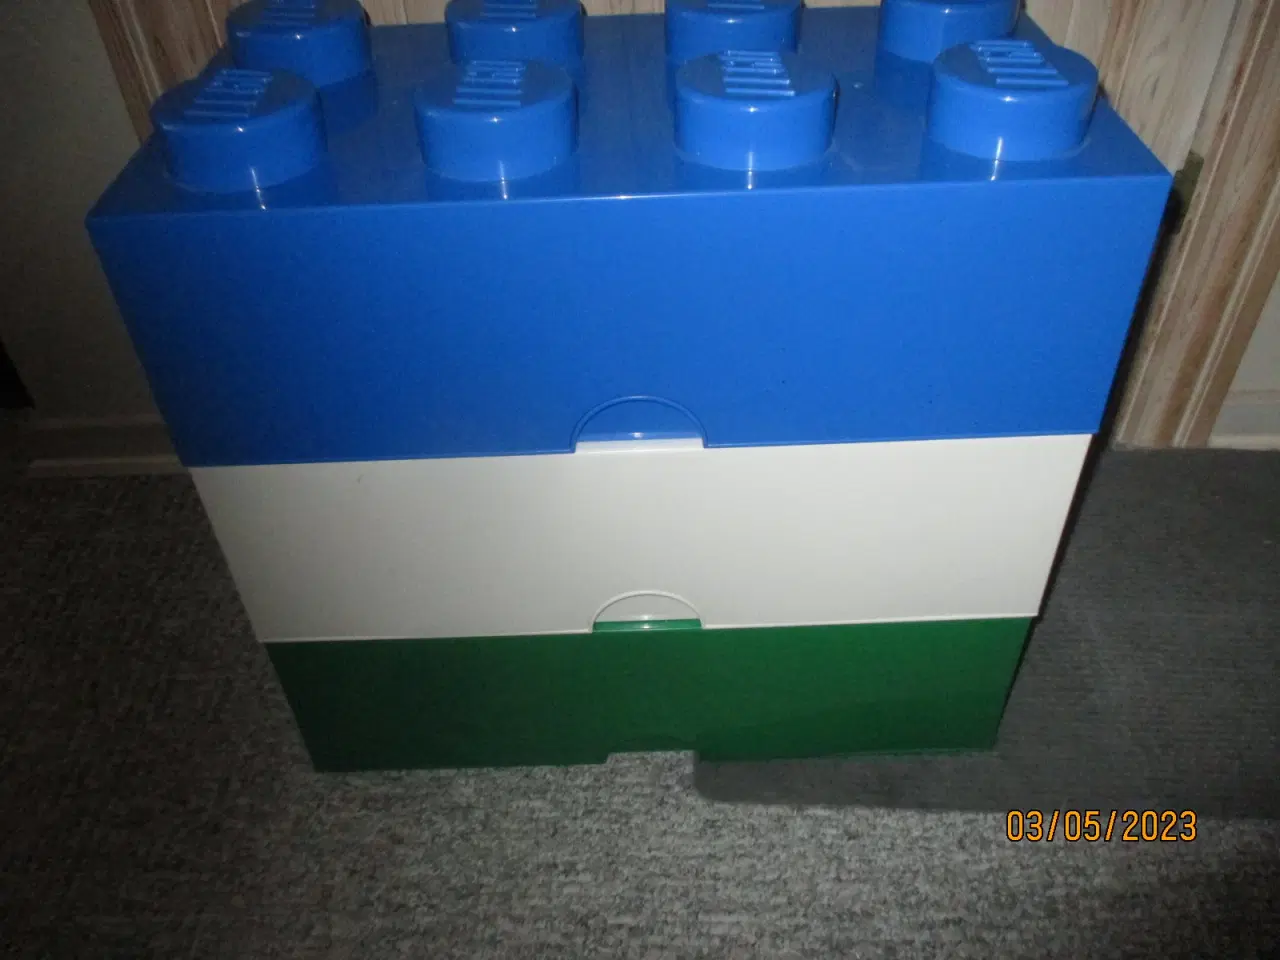 Billede 1 - 3 store lego kasser